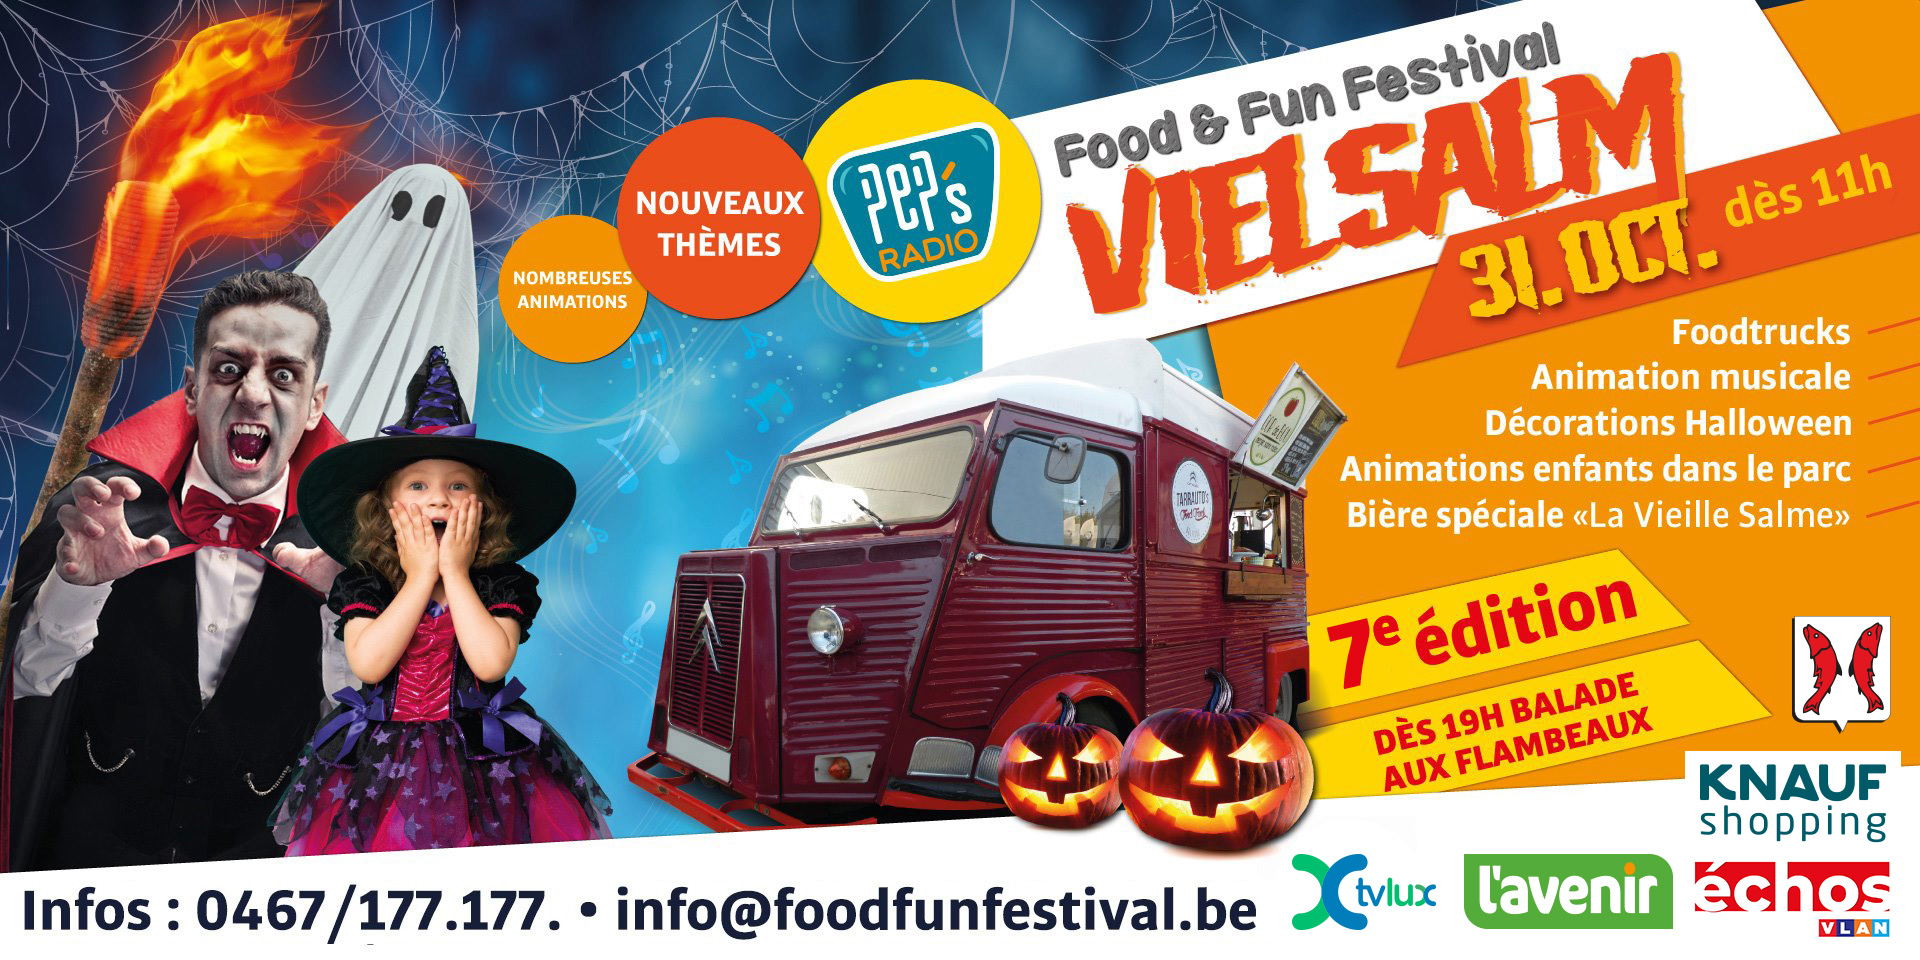 Food and fun festival